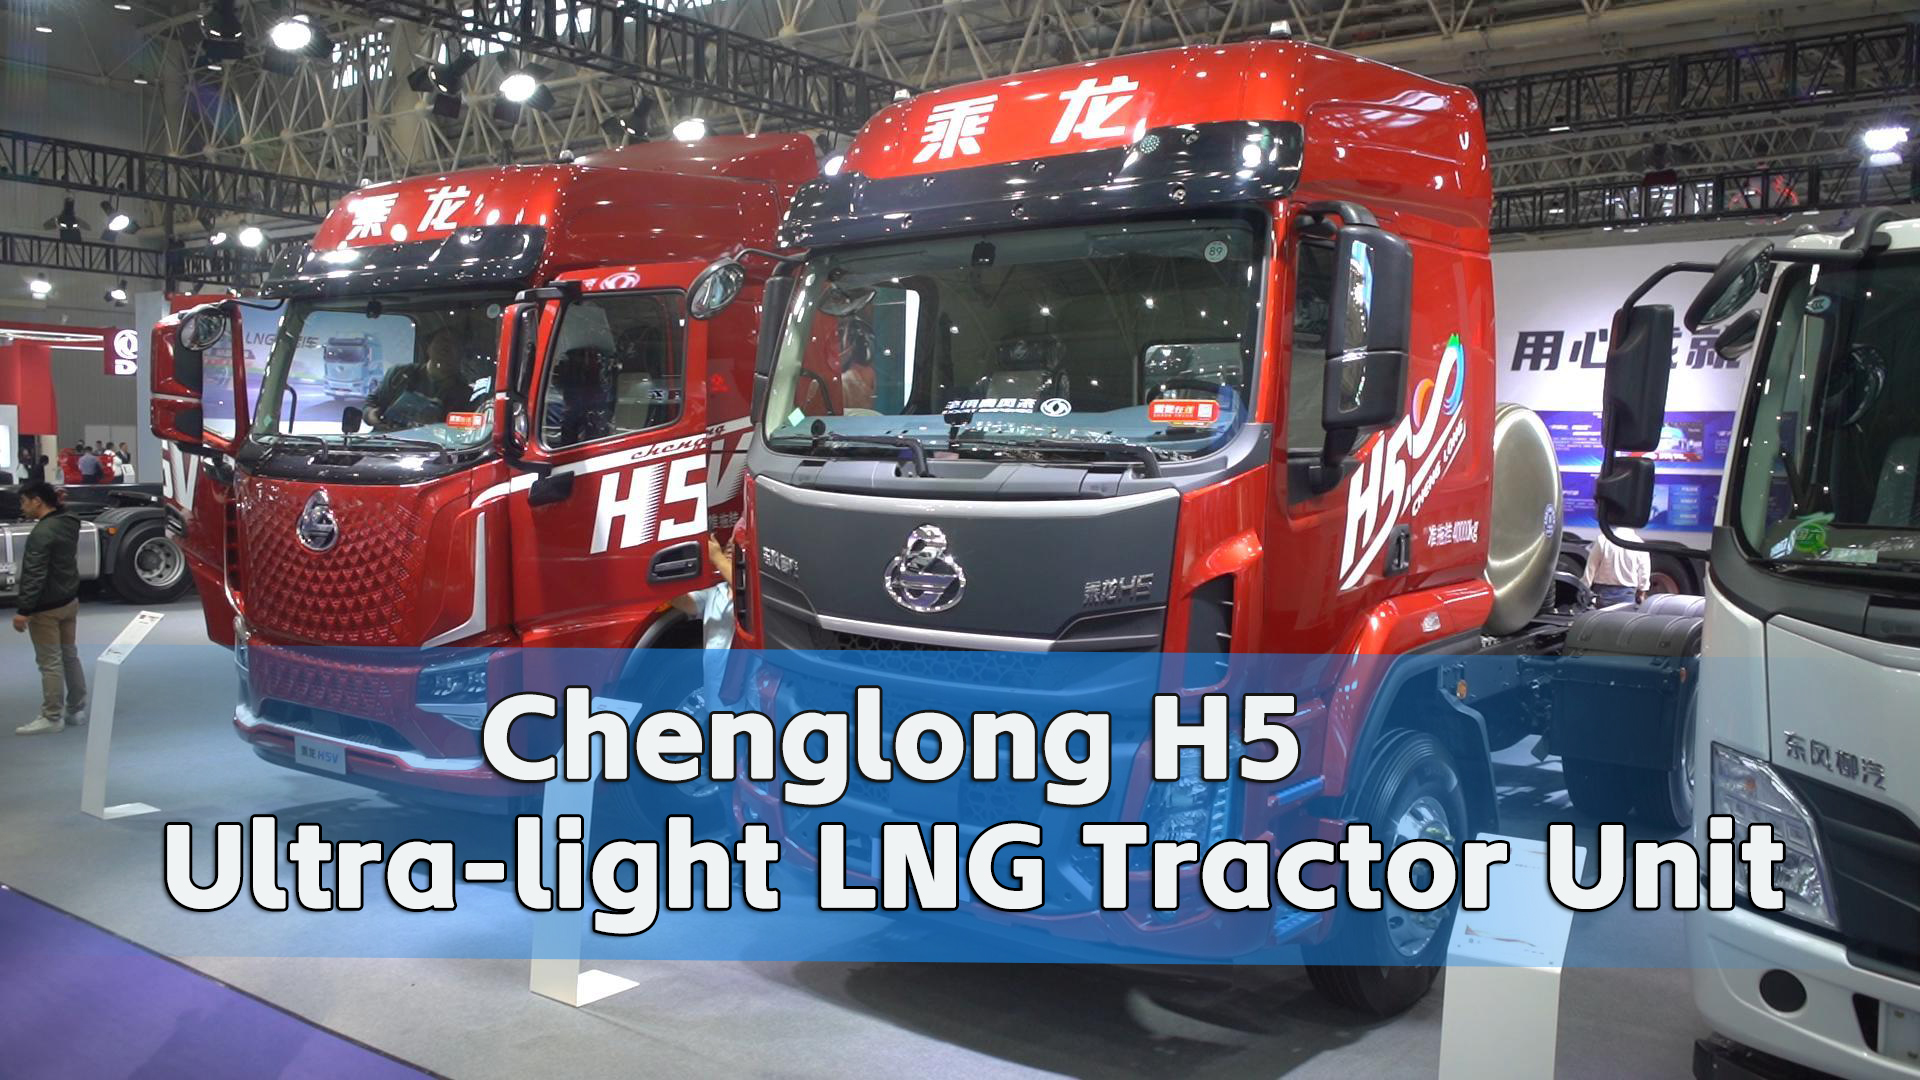 Chenglong H5 Ultra-light LNG Tractor Unit